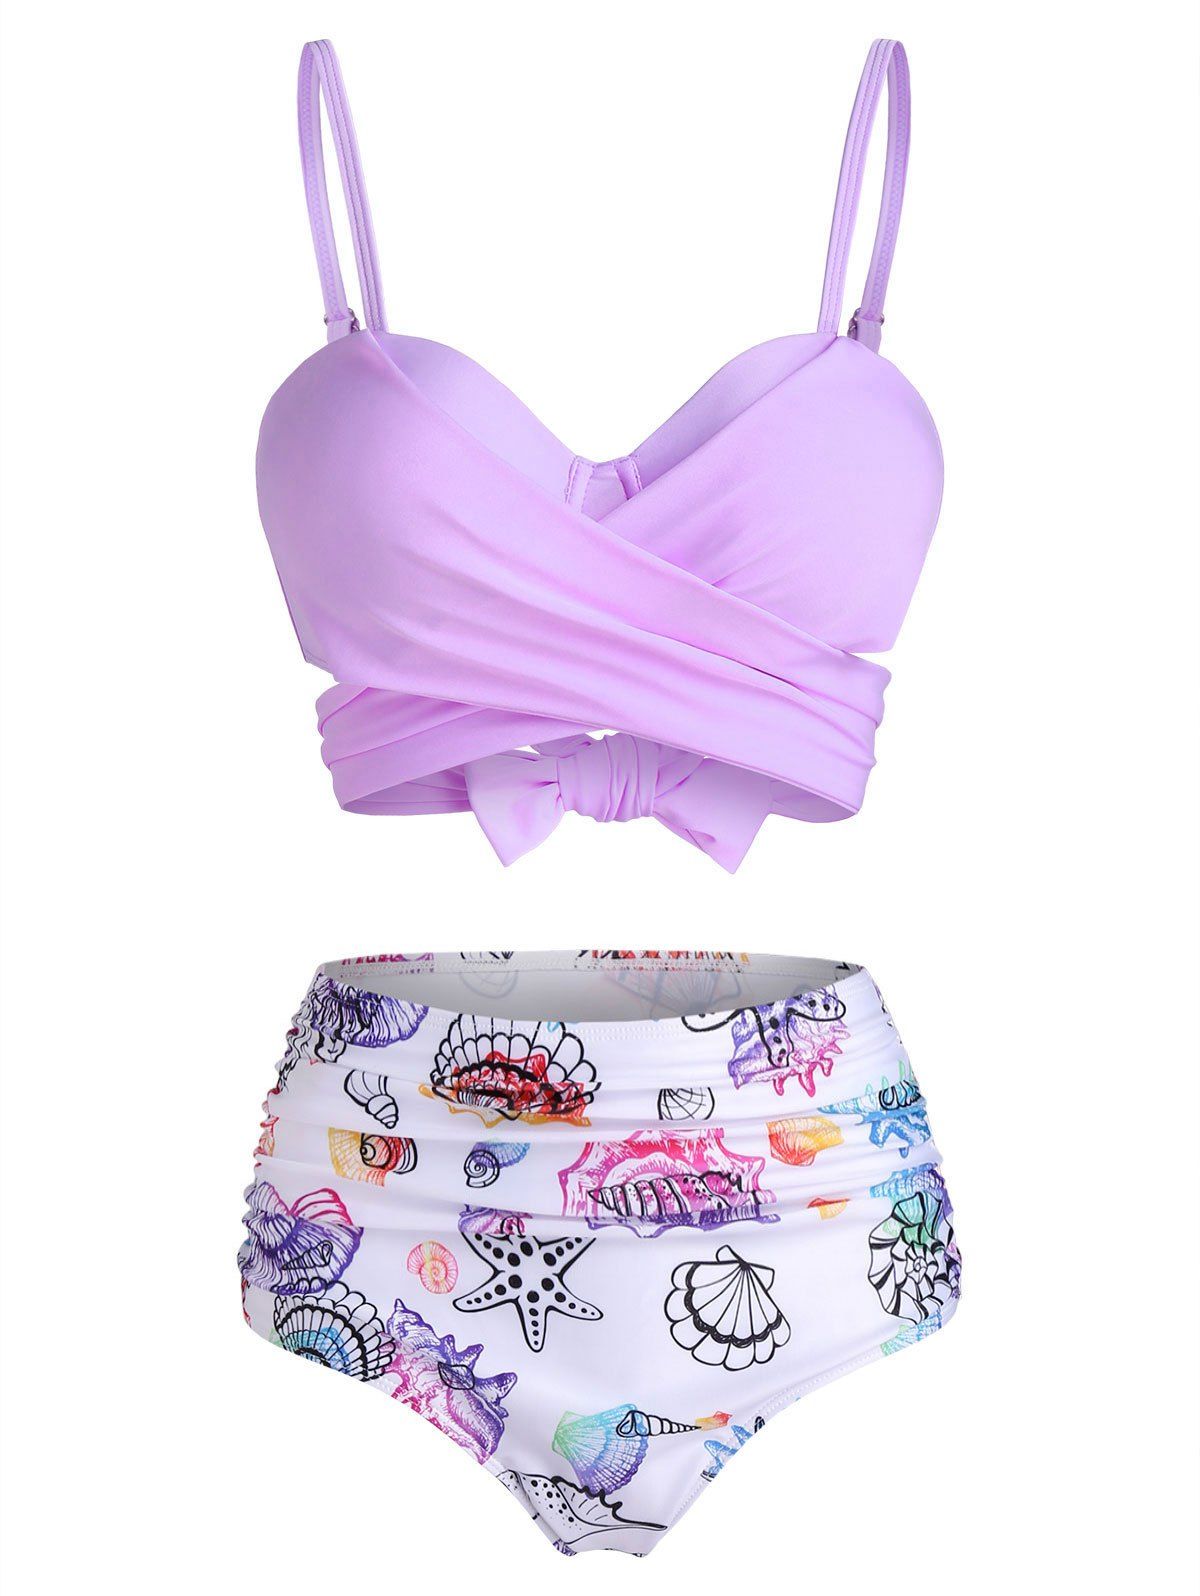 Shell Starfish Print Padded Wrap Bikini Set - LIGHT PURPLE 2XL